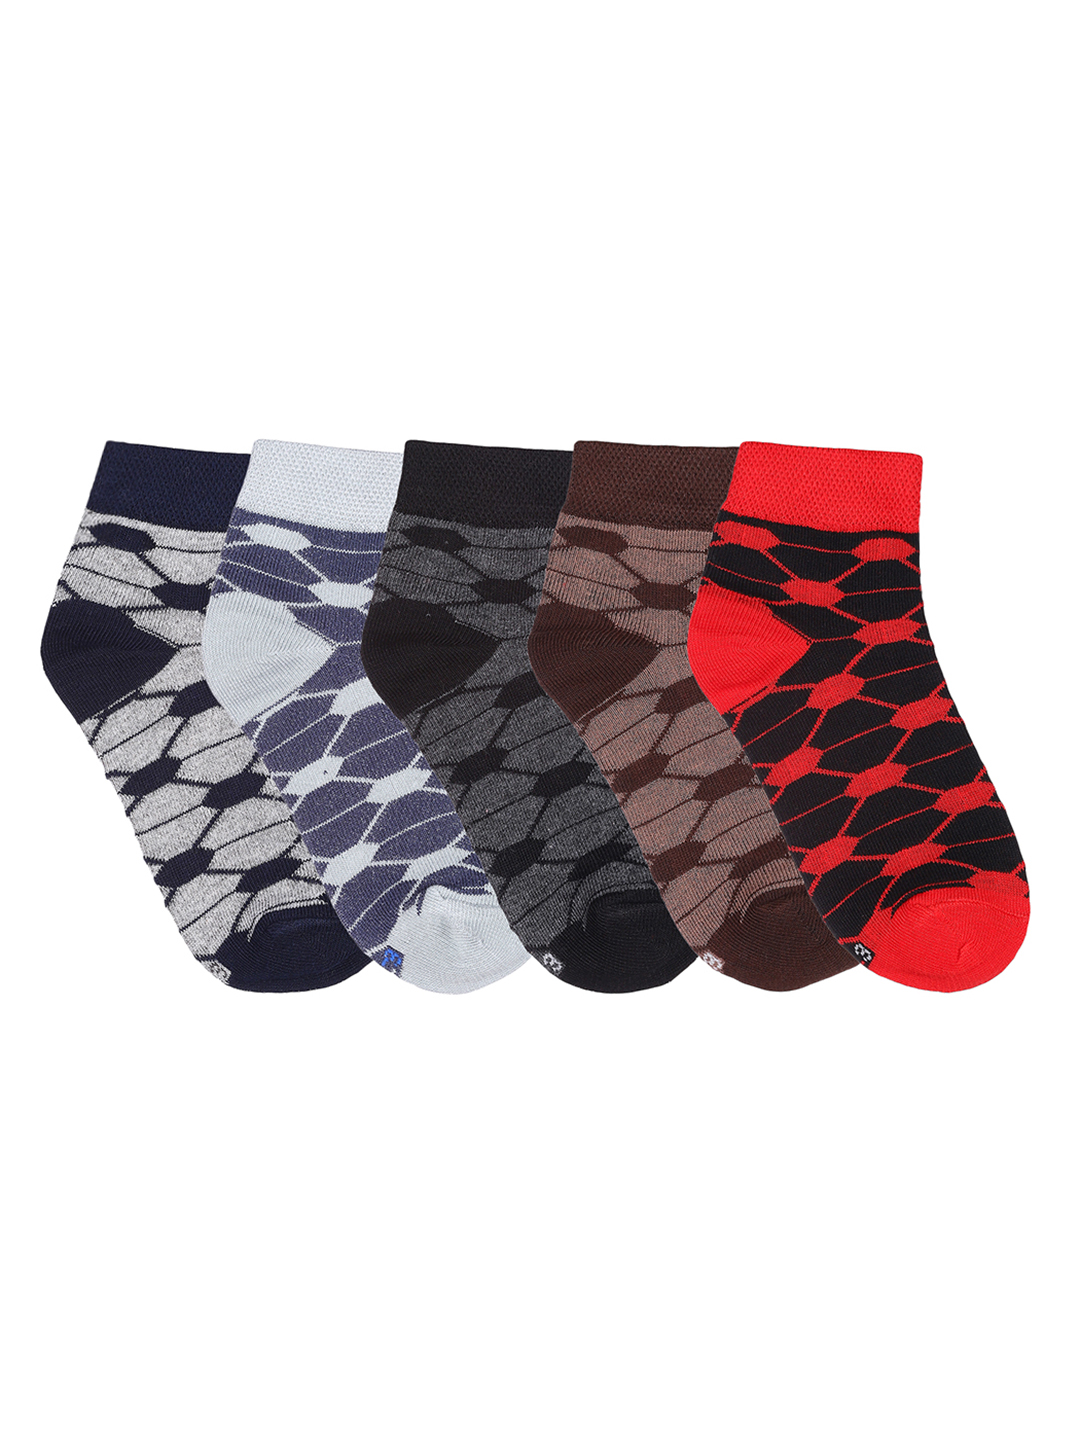 Kids Allover Design Cotton Spandex Ankle Socks3